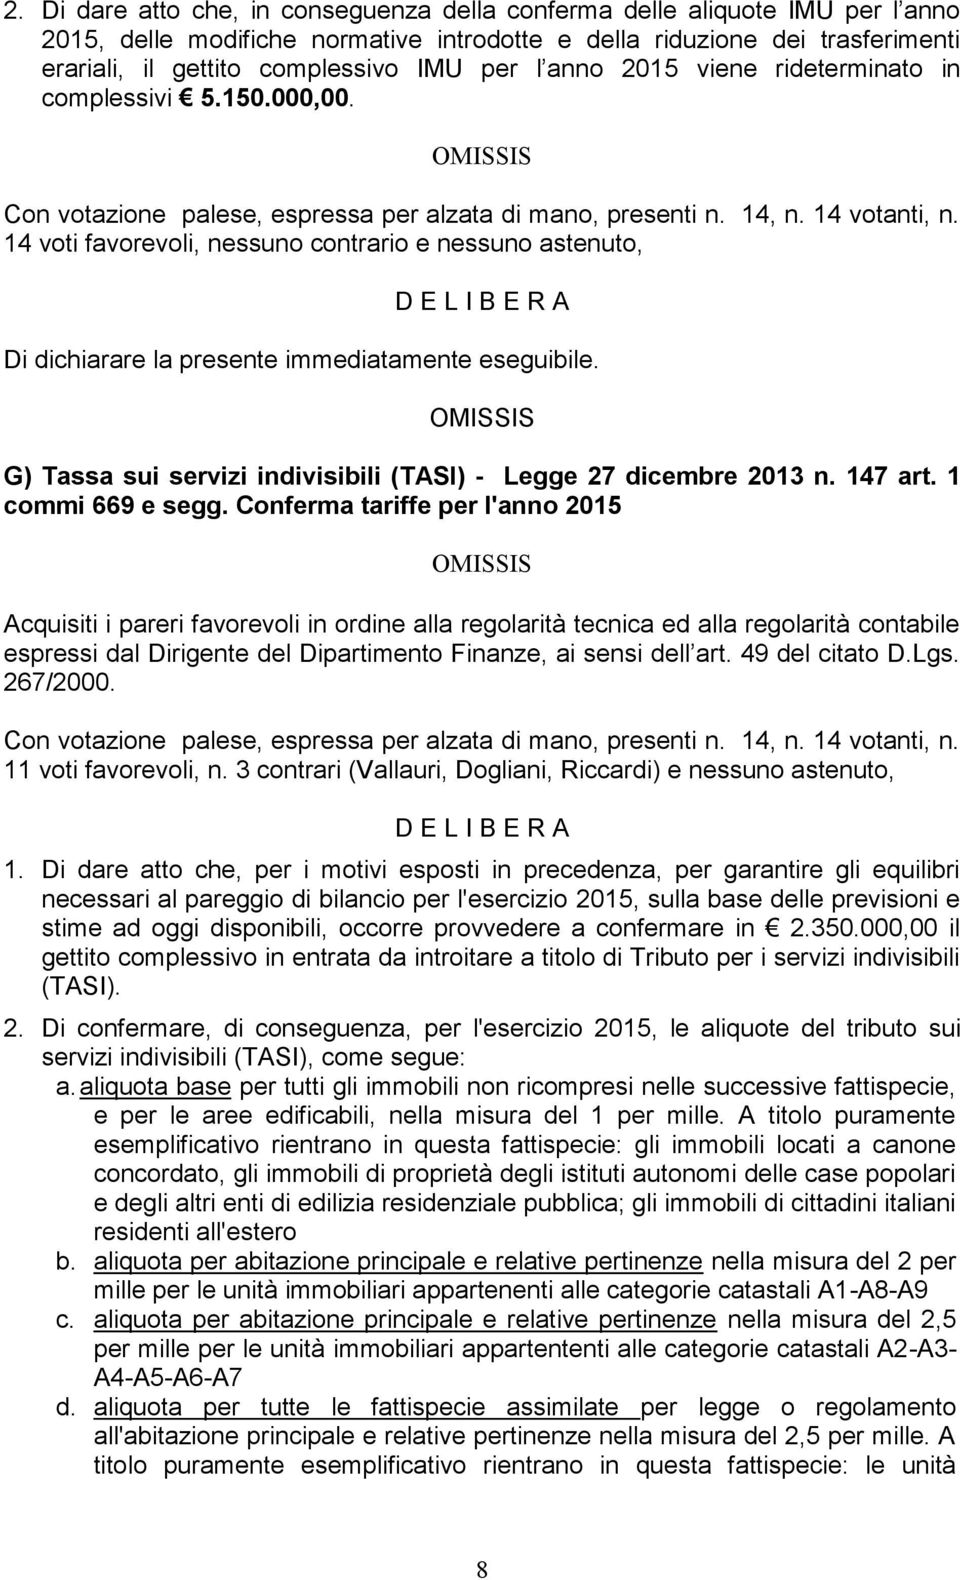 G) Tassa sui servizi indivisibili (TASI) - Legge 27 dicembre 2013 n. 147 art. 1 commi 669 e segg.